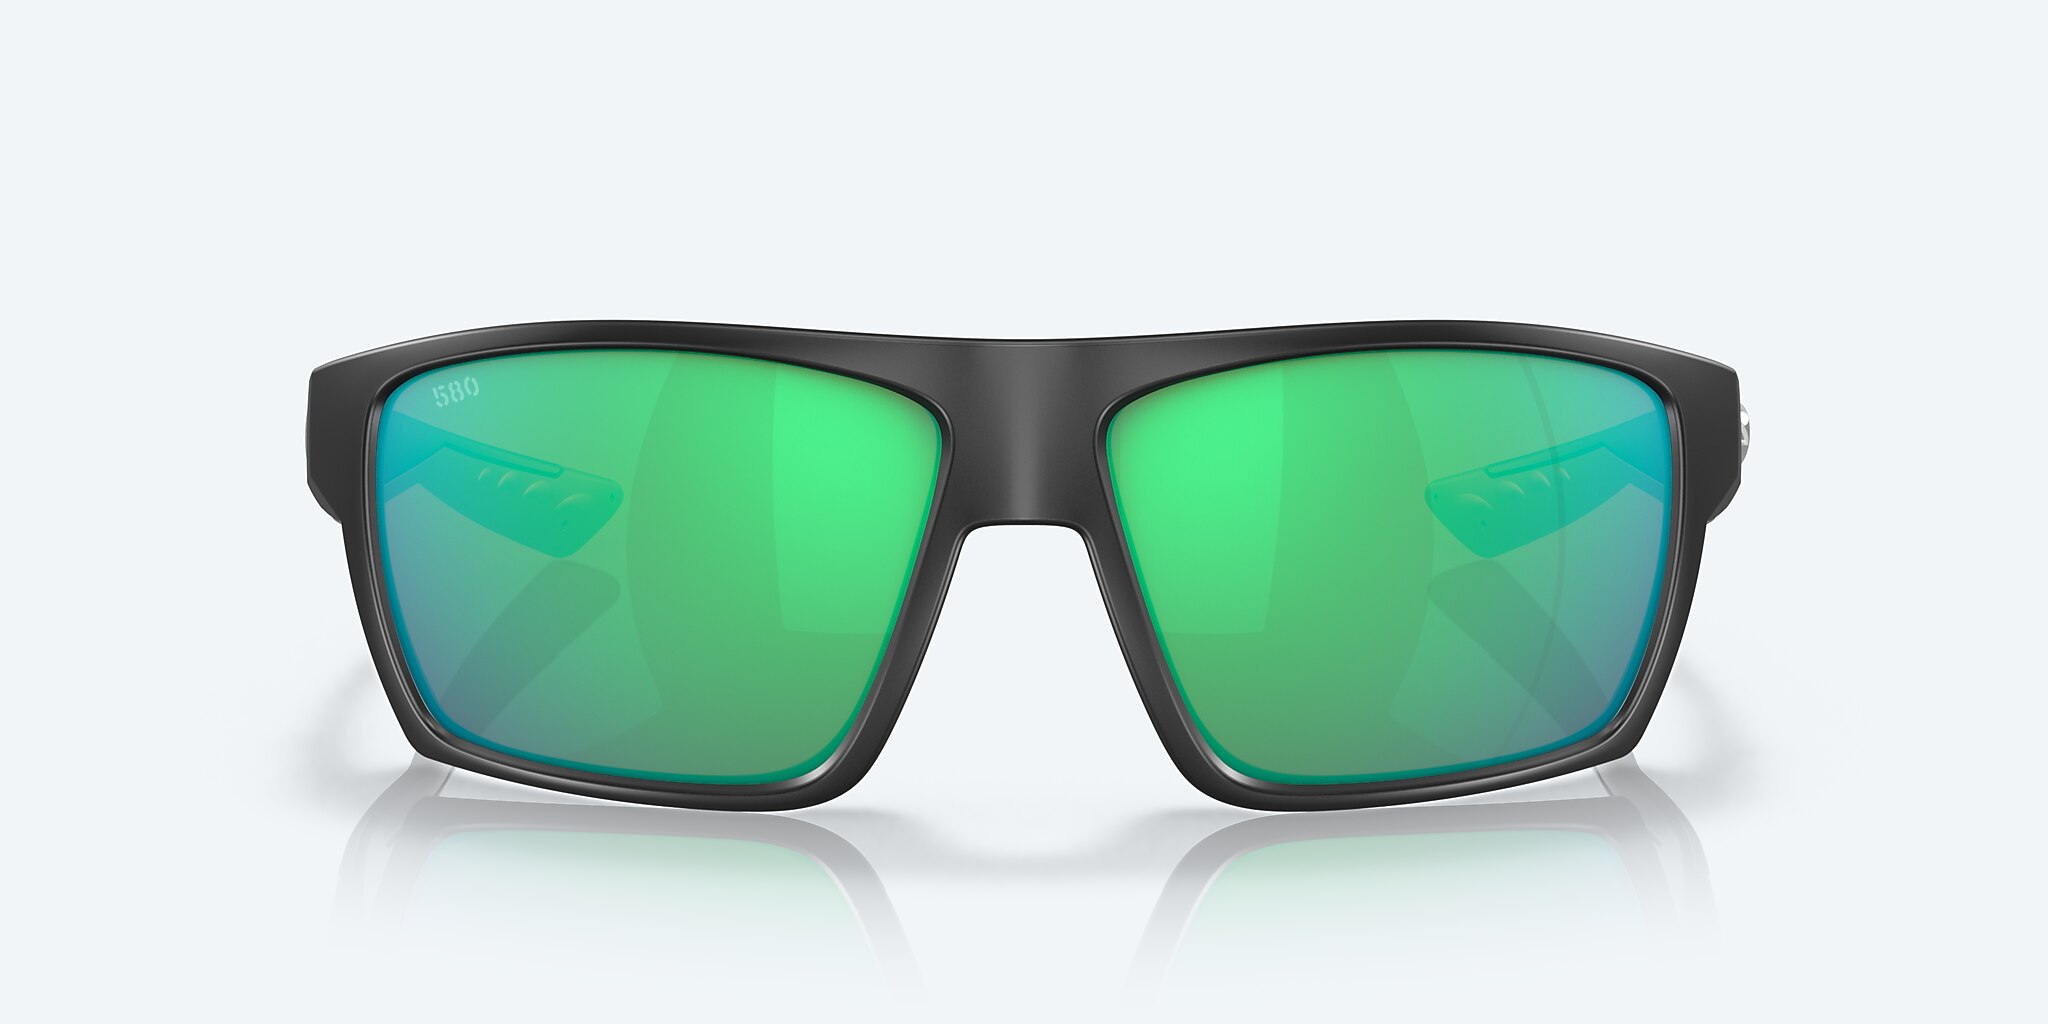 Costa Diego - Green Mirror 580G / Matte Black Sunglasses